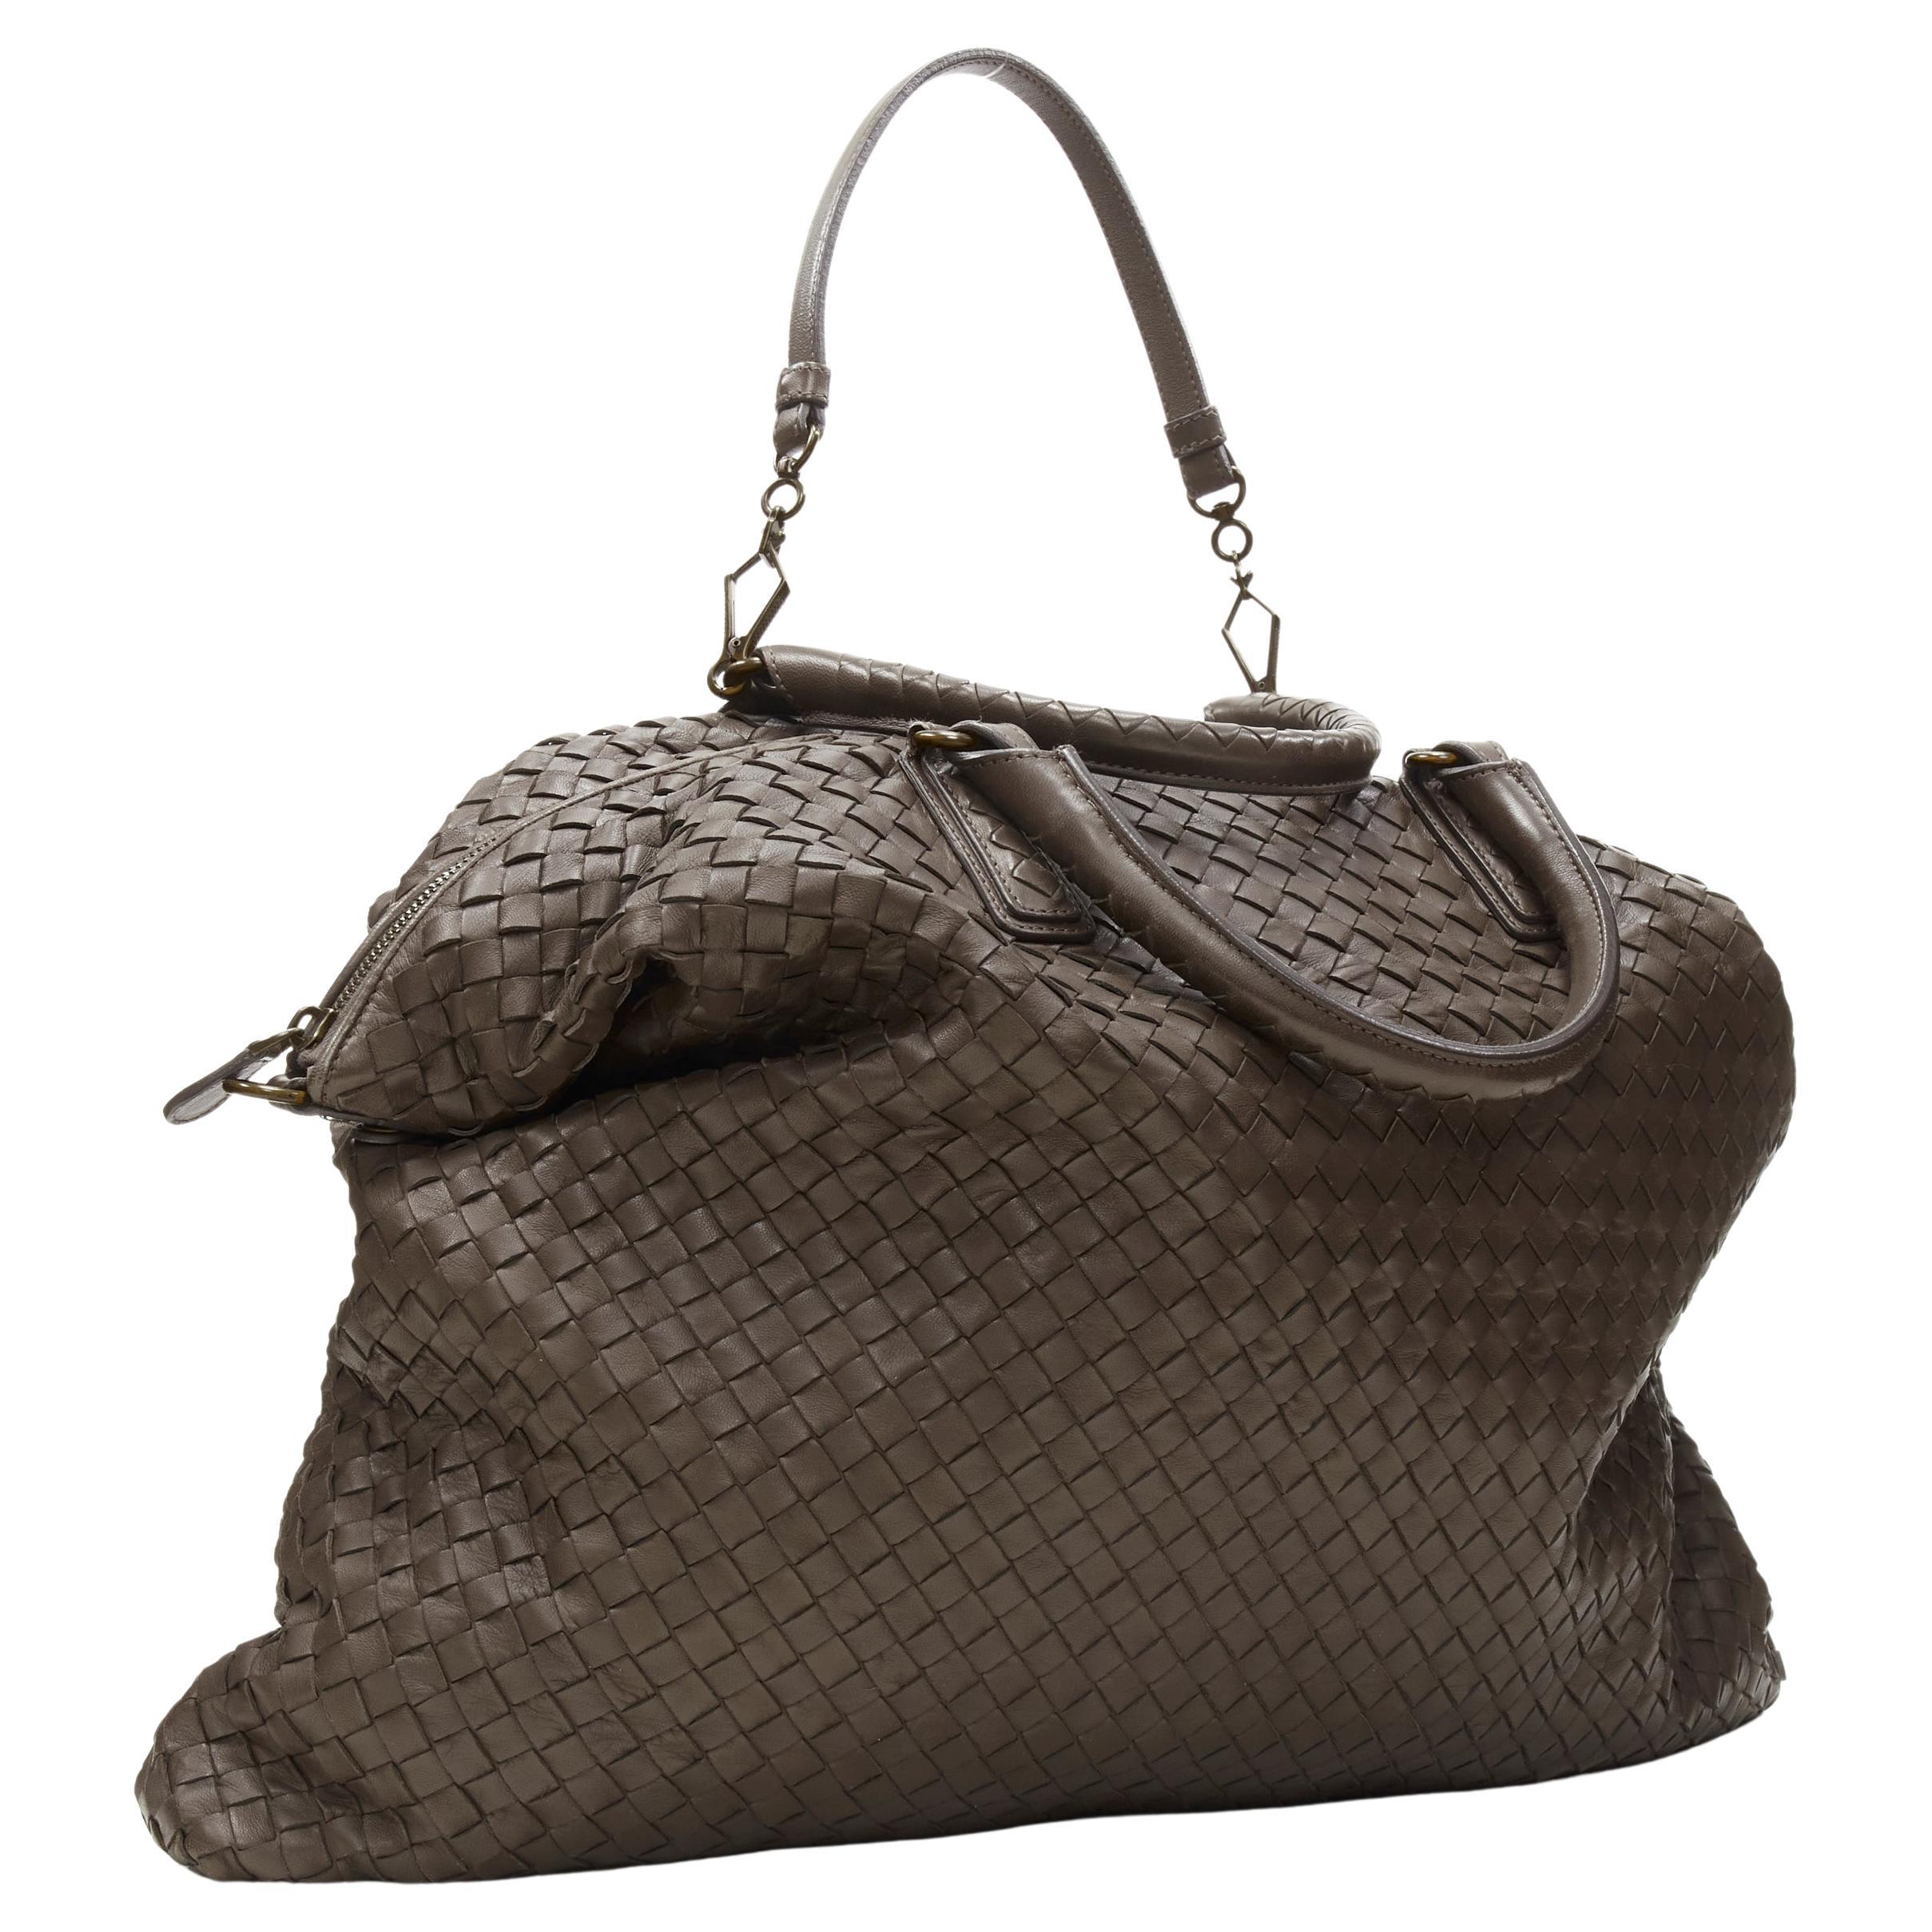 BOTTEGA VENETA Intrecciato brown woven leather pinched side large tote bag